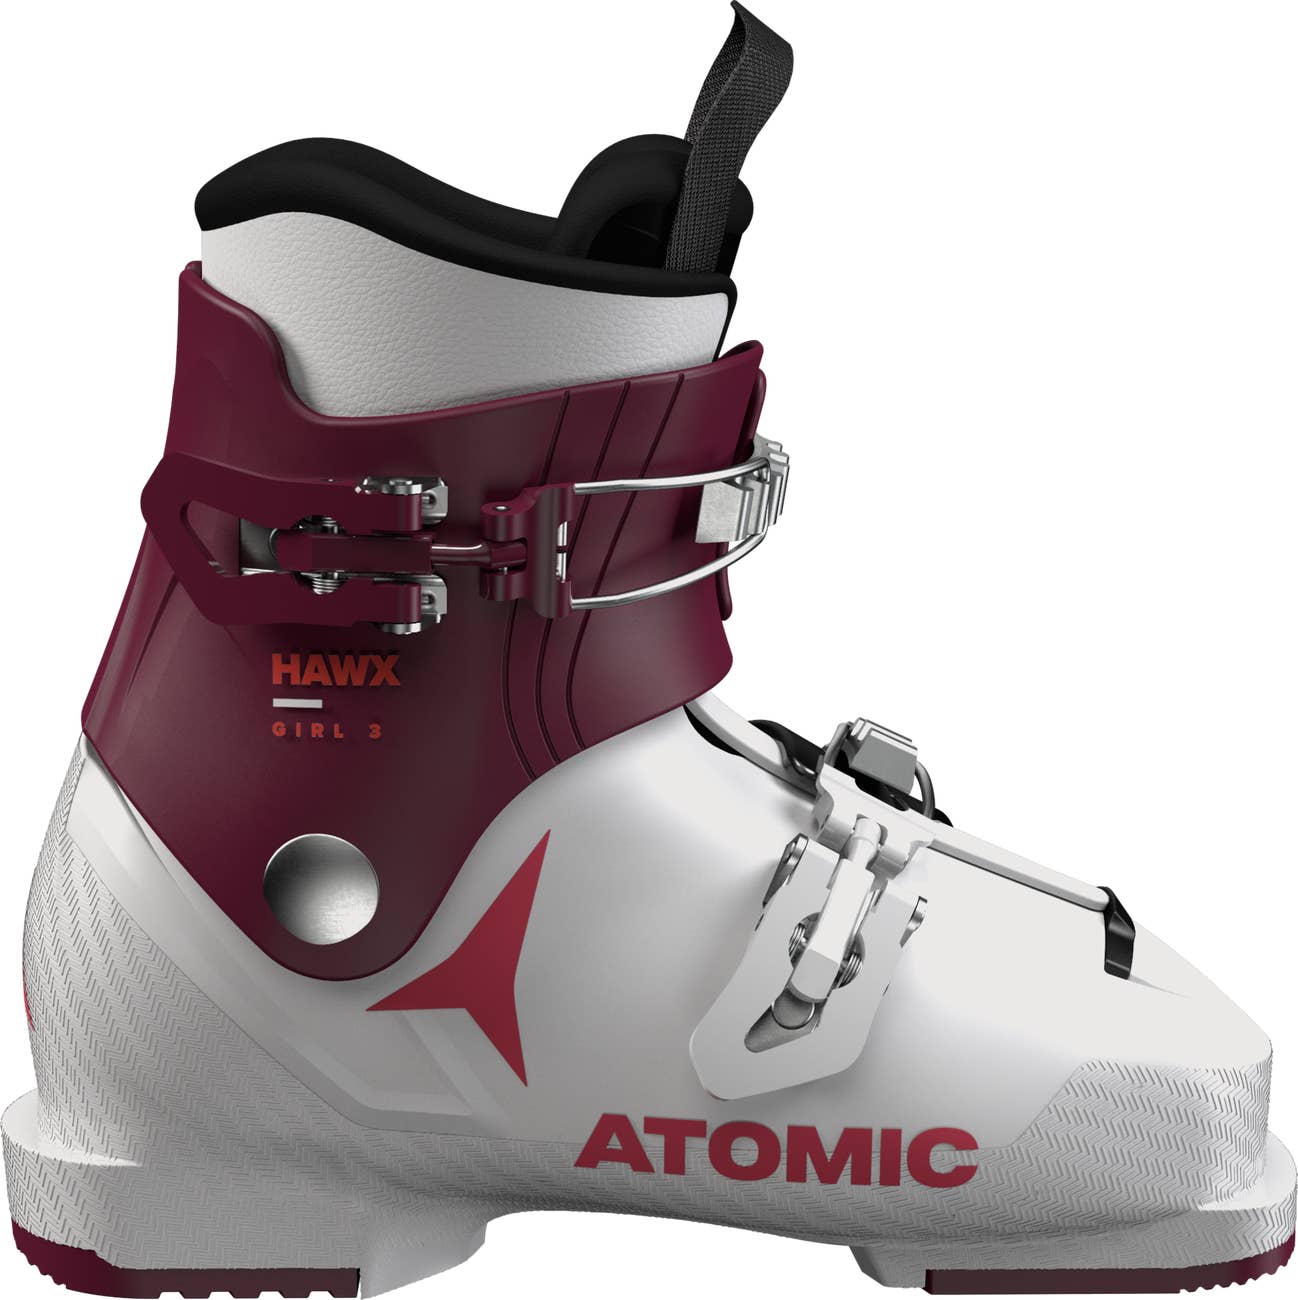 Hawx Girl 2 Village Ski Hut Atomic Junior, Junior Boots, Ski, Winter 2023